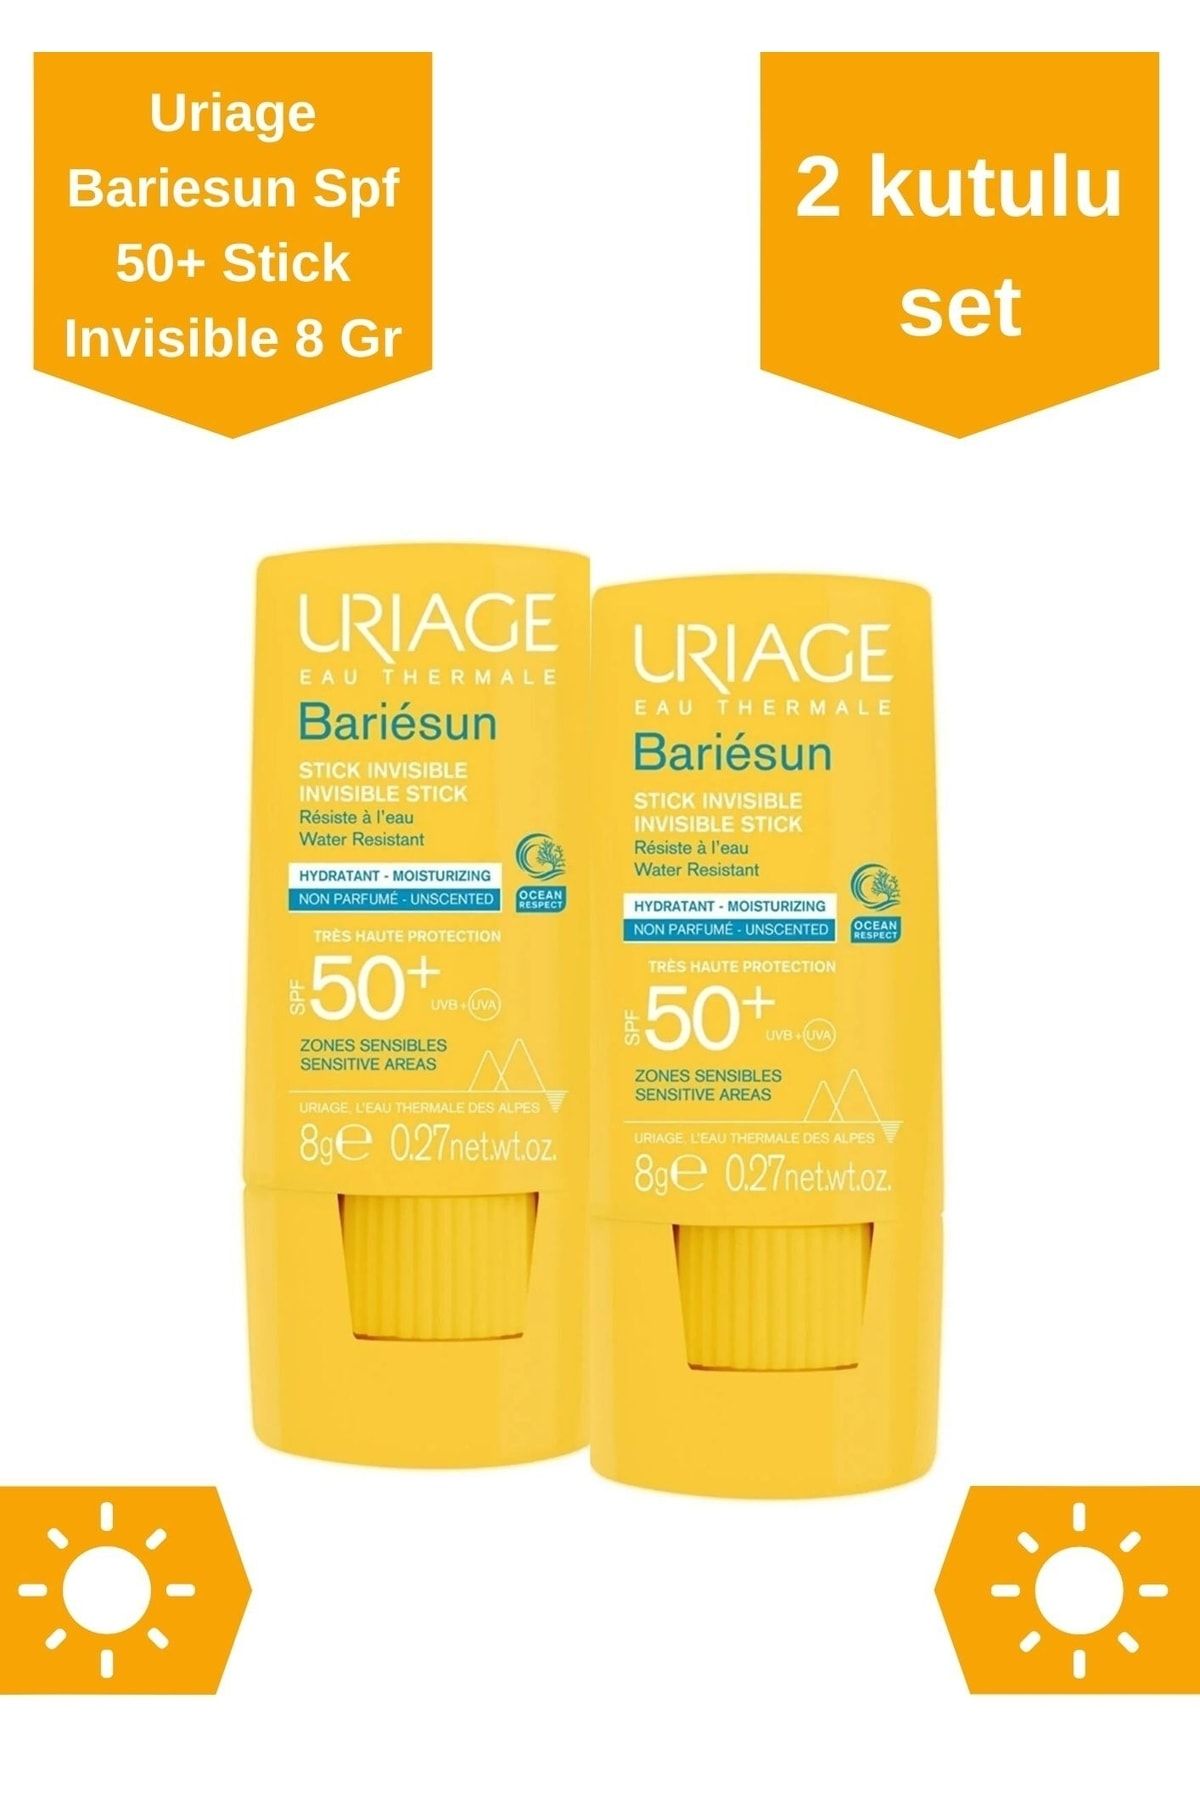 Uriage Bariesun Spf 50+ Stick Invisible 8 Gr | 2 Kutulu Set